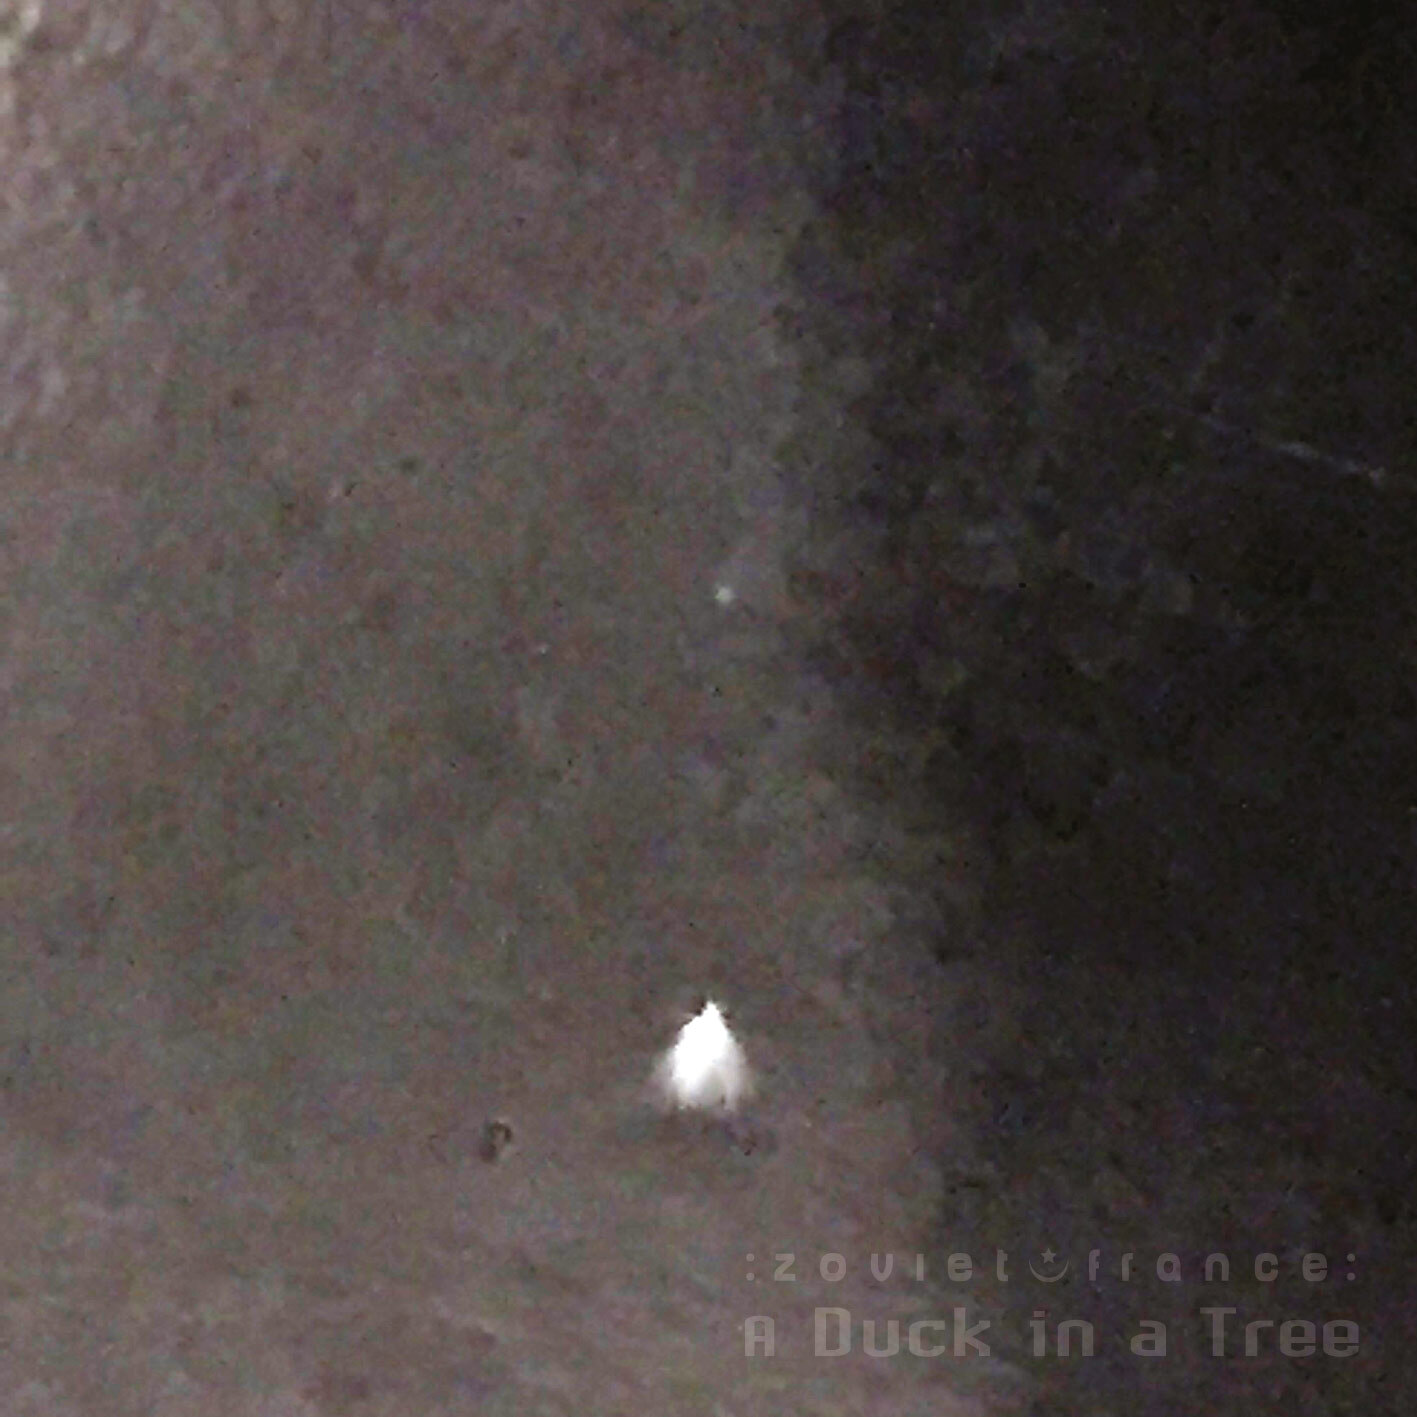 A-Duck-in-a-Tree-2019-07-13-_-Peak-Ending-cover-1500.jpg